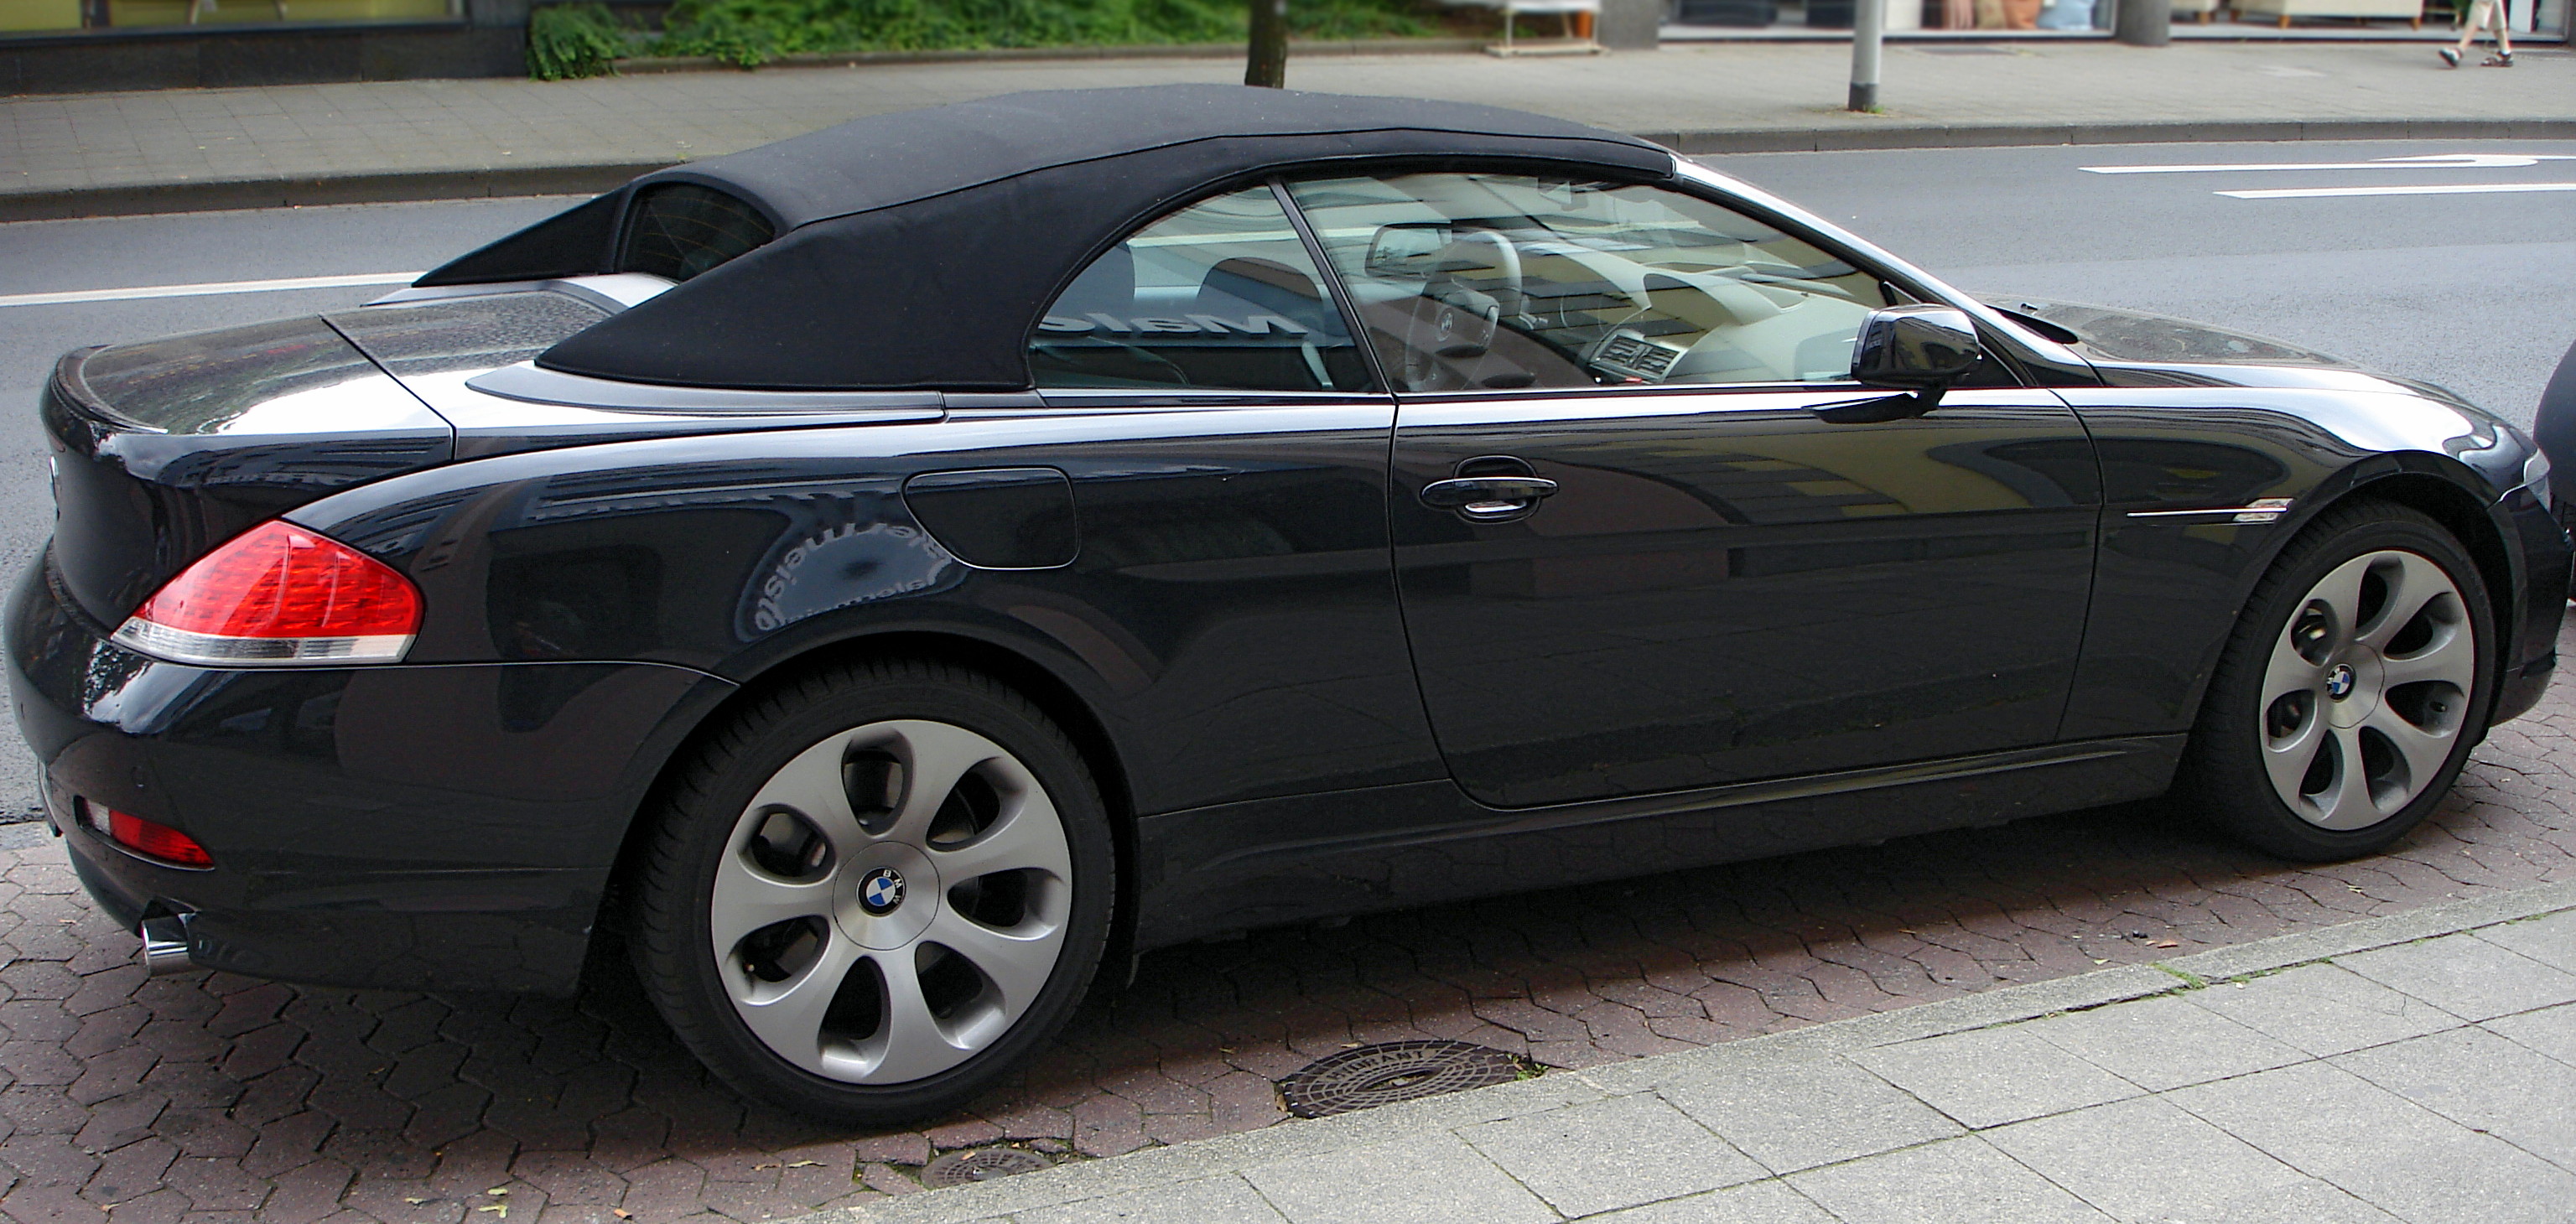 File:BMW 645 E64 side.jpg - Wikimedia Commons